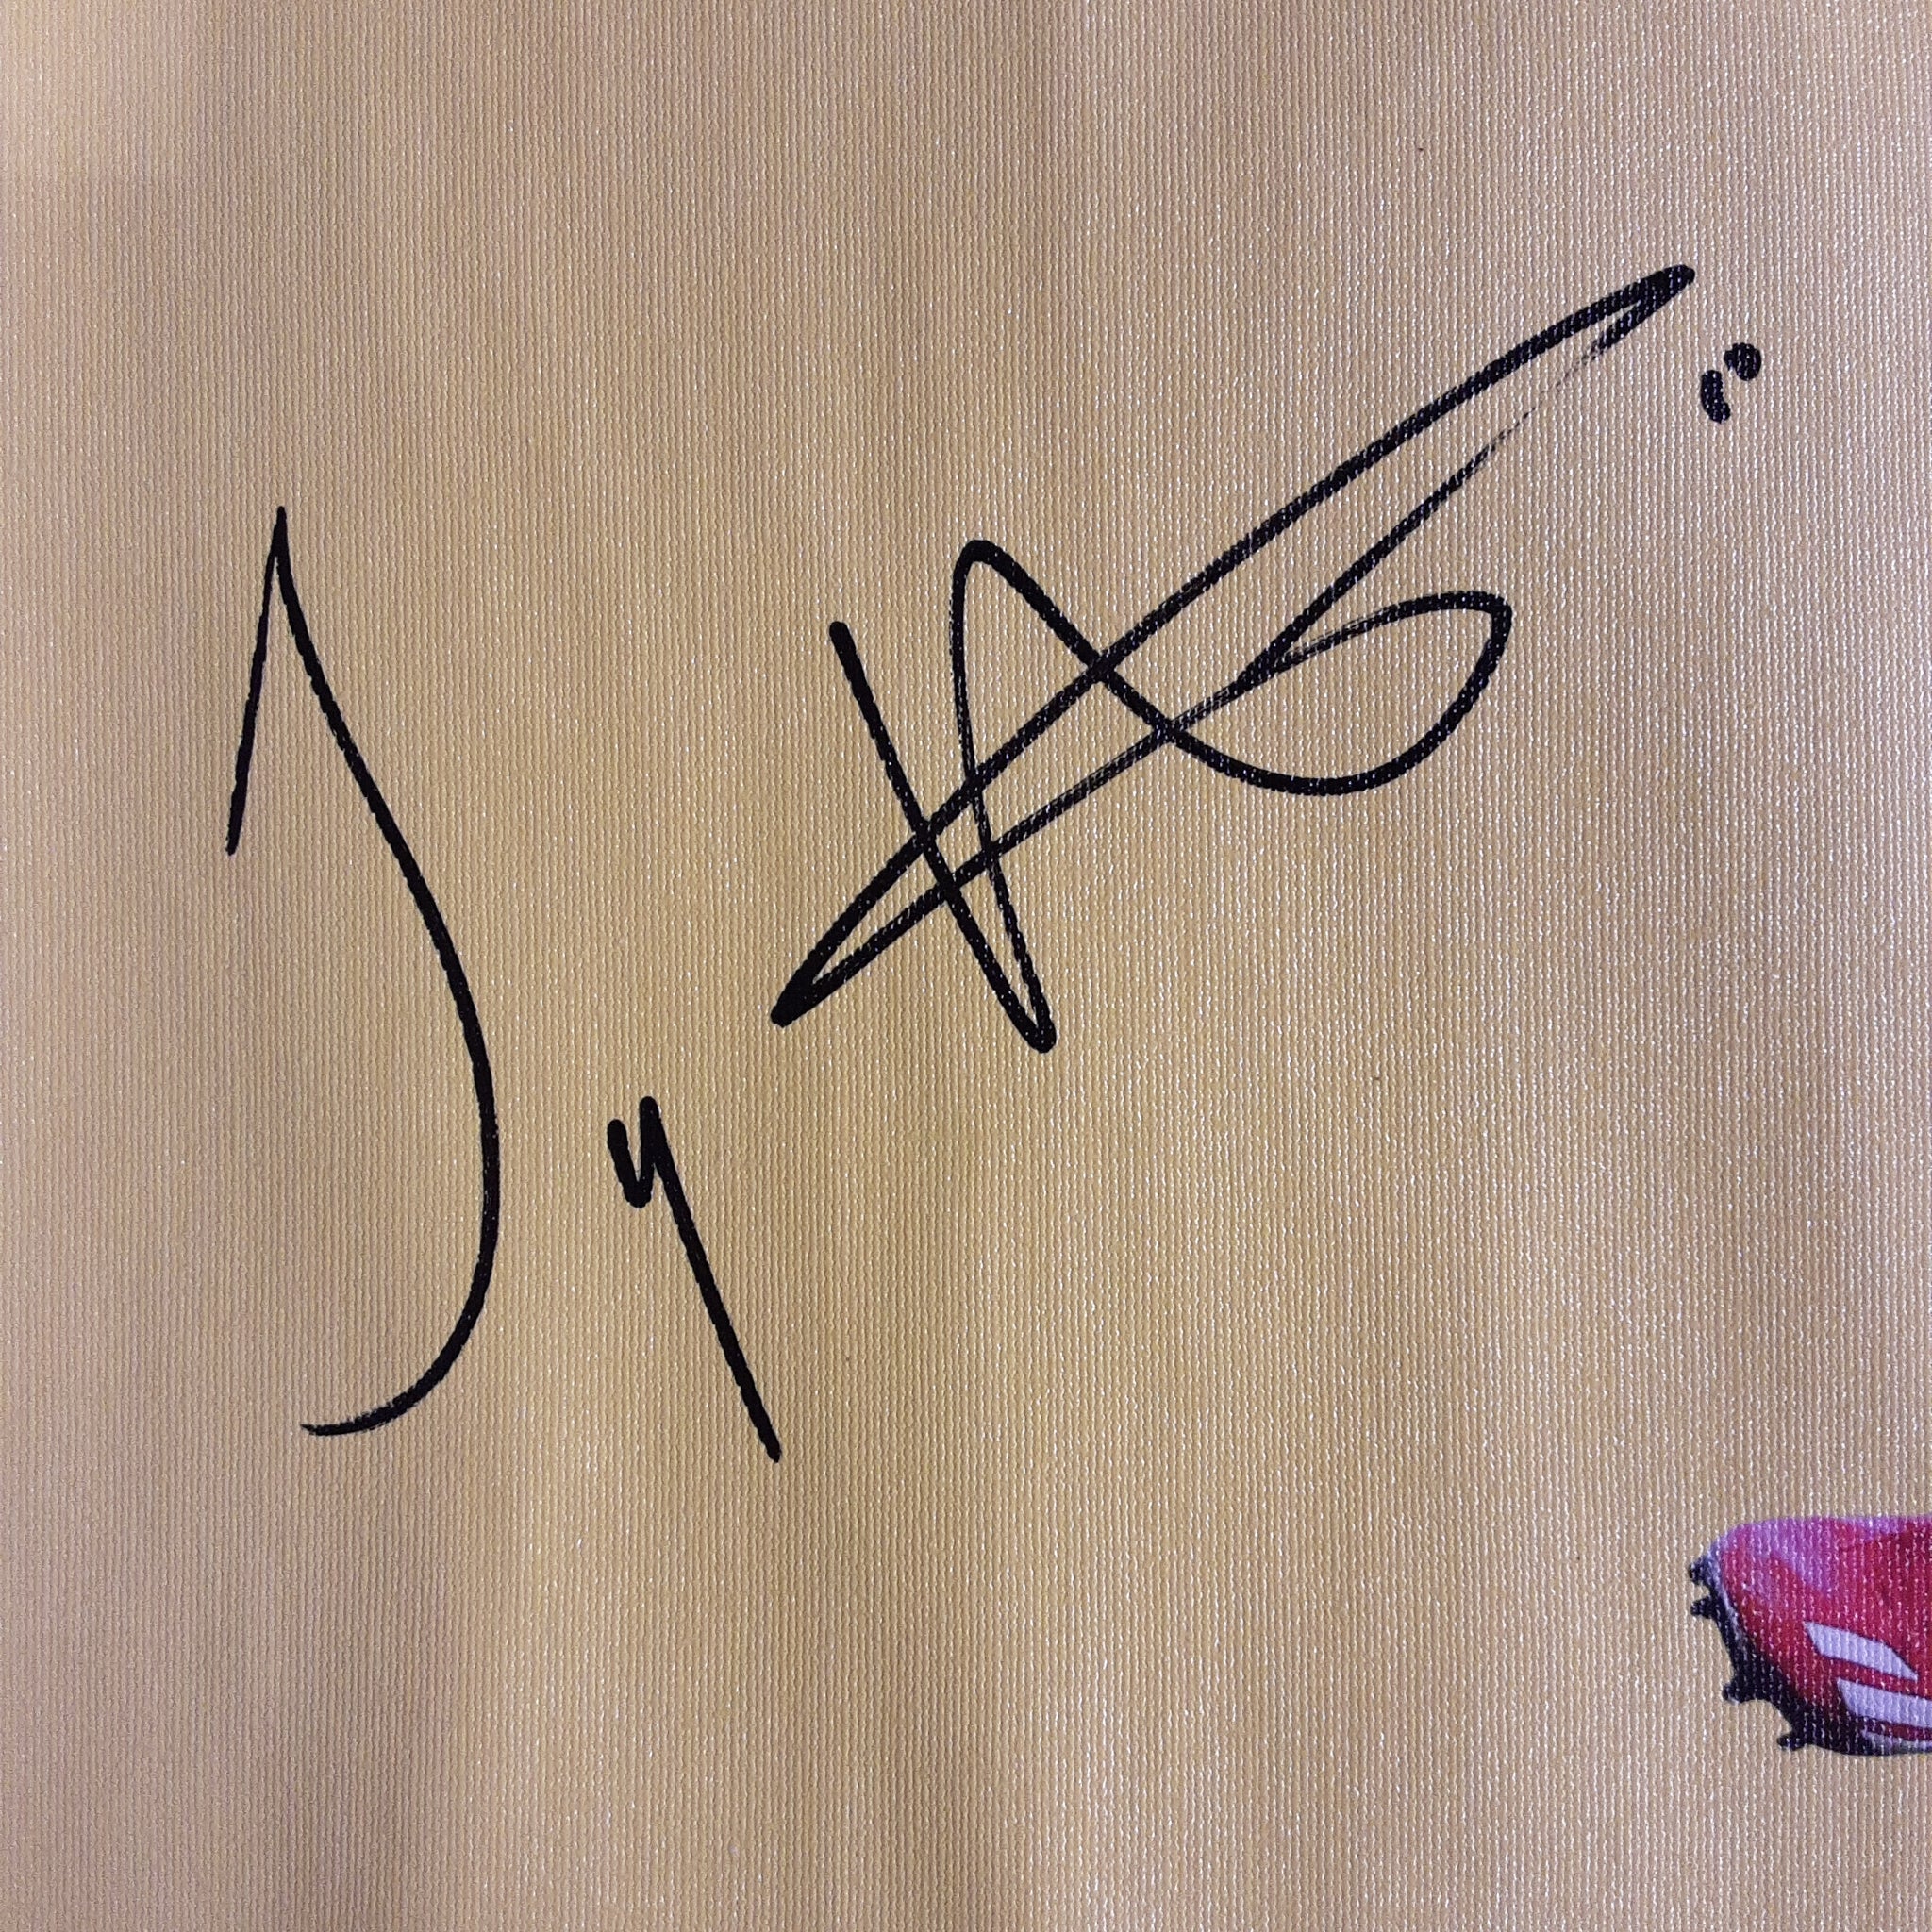 Tyreek Hill Signed 16x20 Canvas Autographed JSA